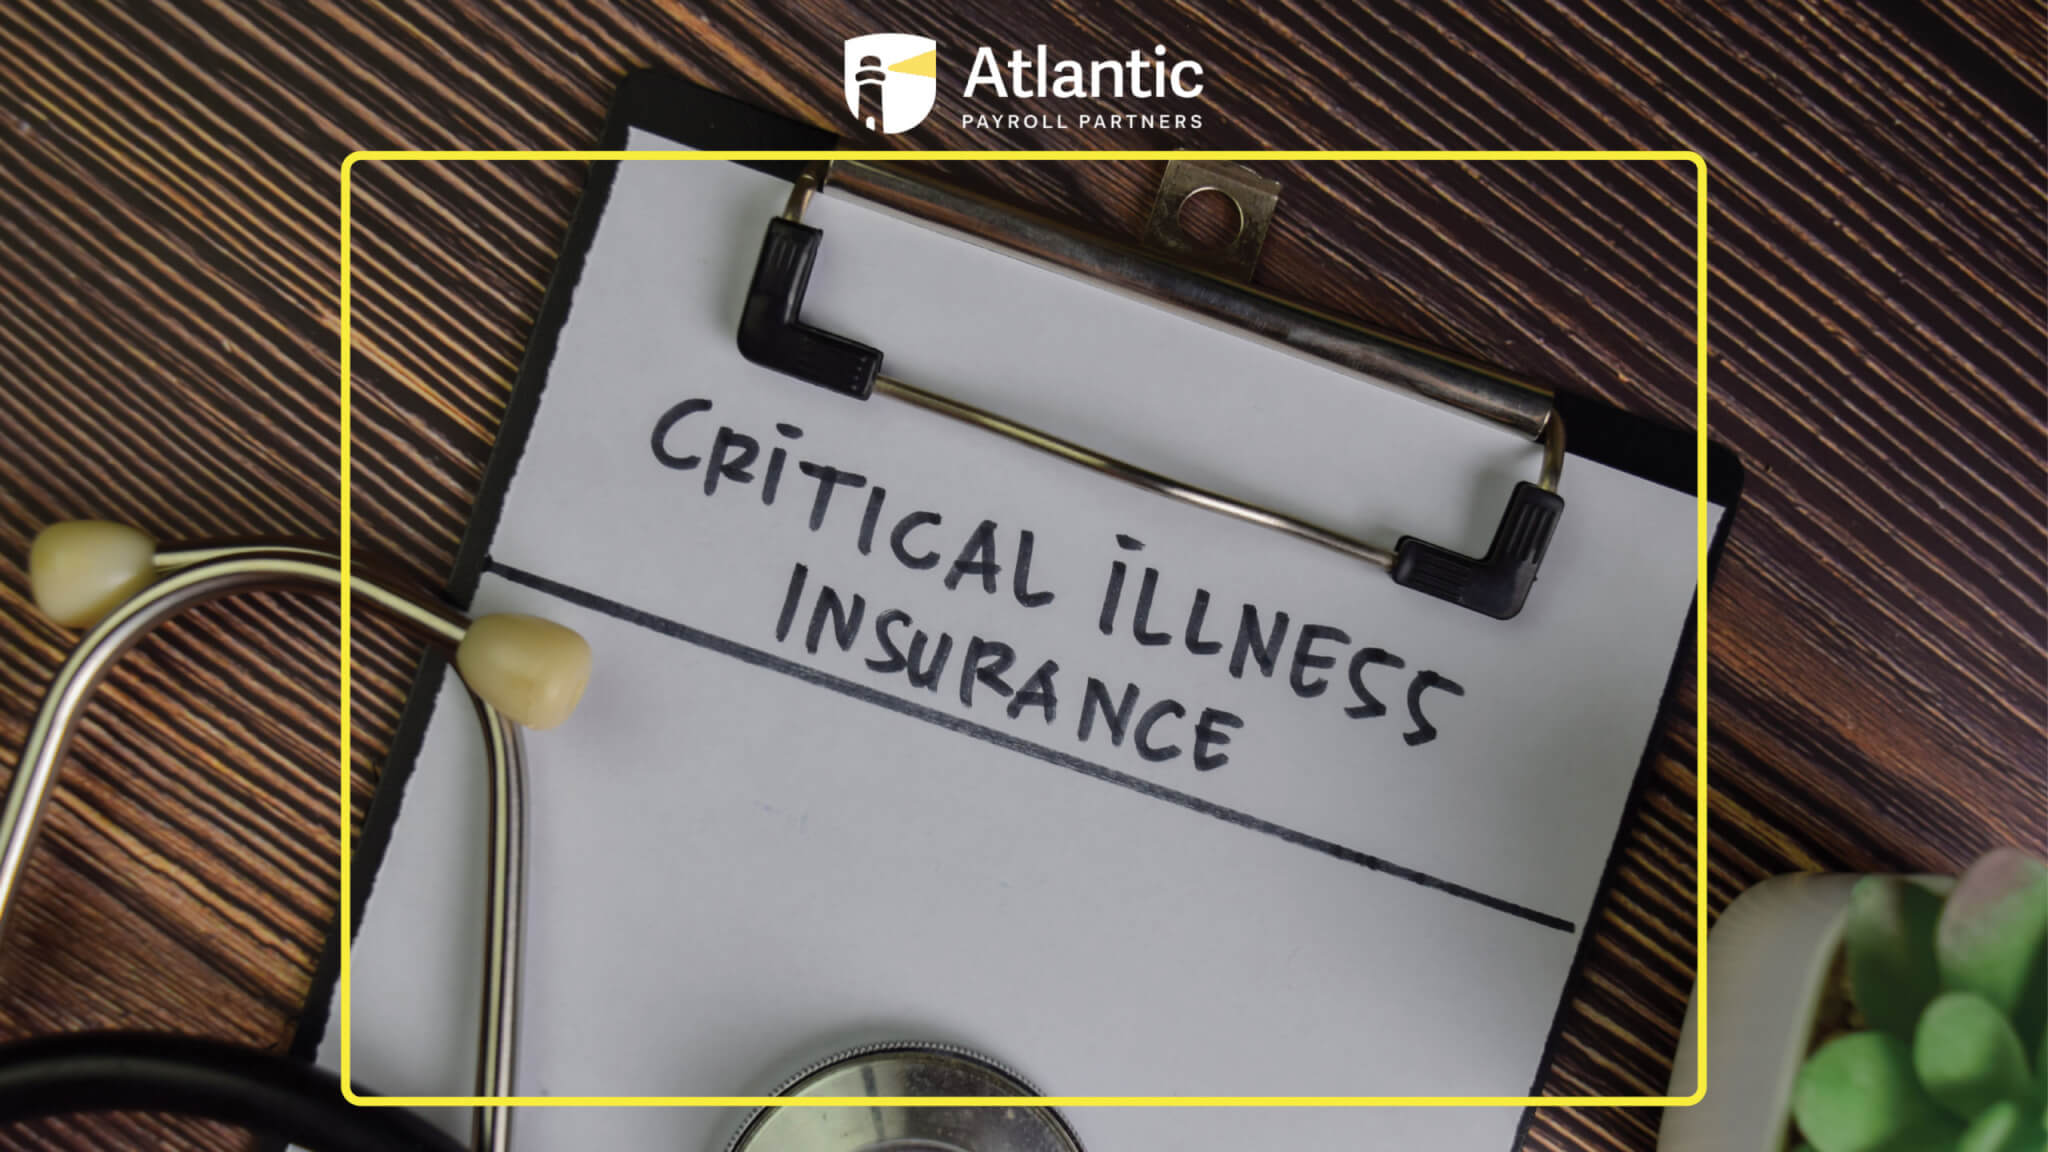 Do you need critical illness insurance?